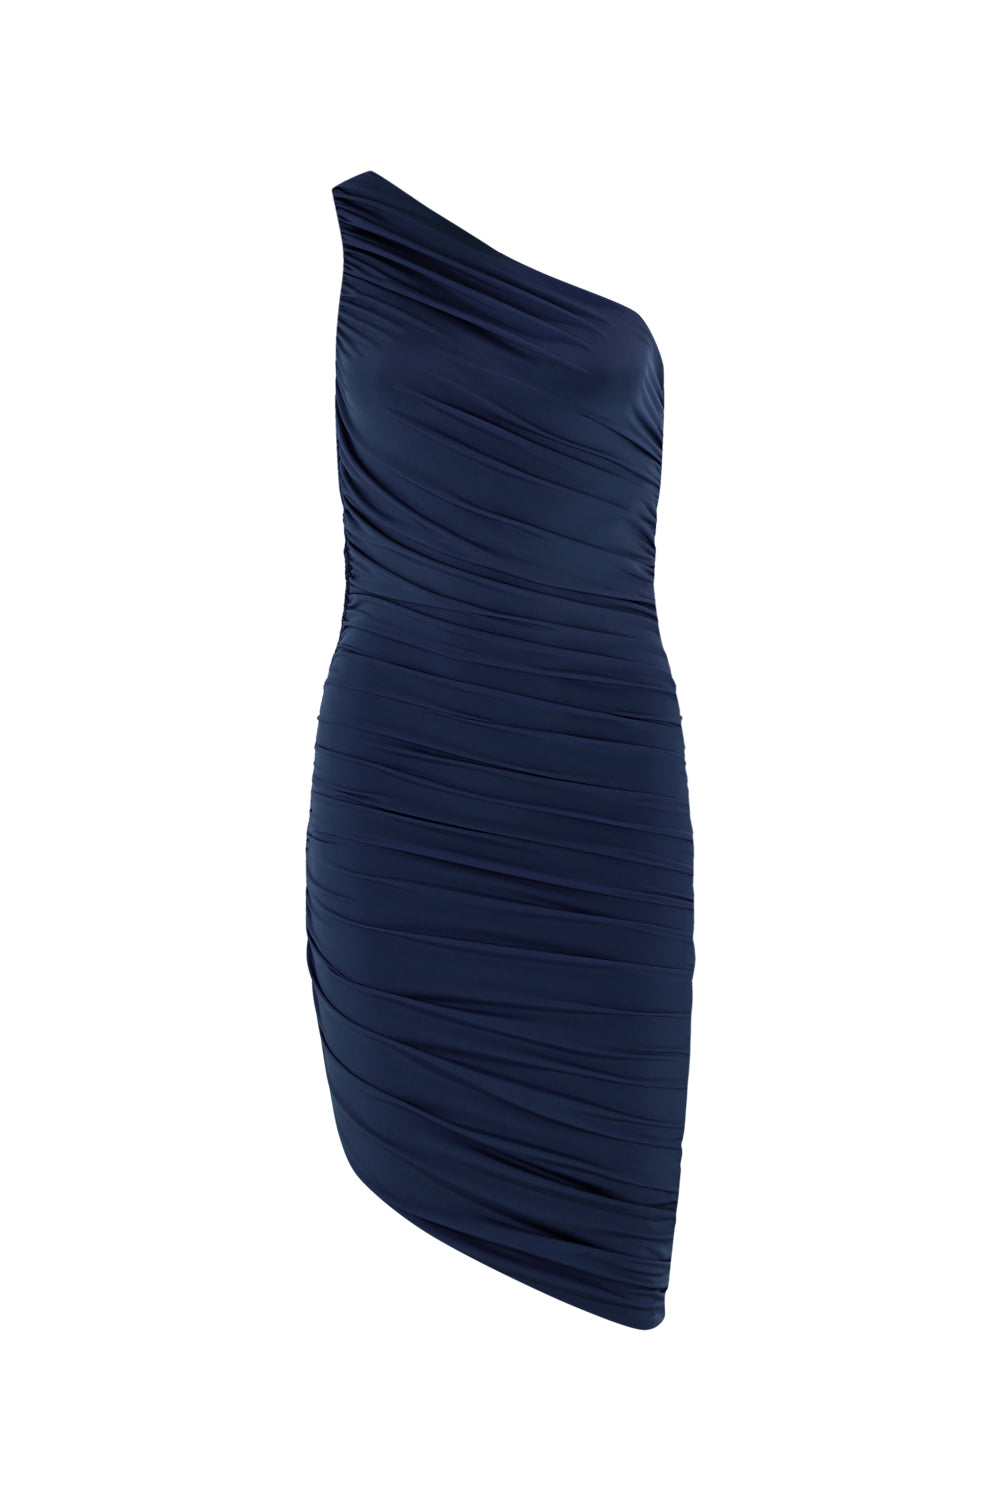 Asymmetric Draped Dress - Navy Blue